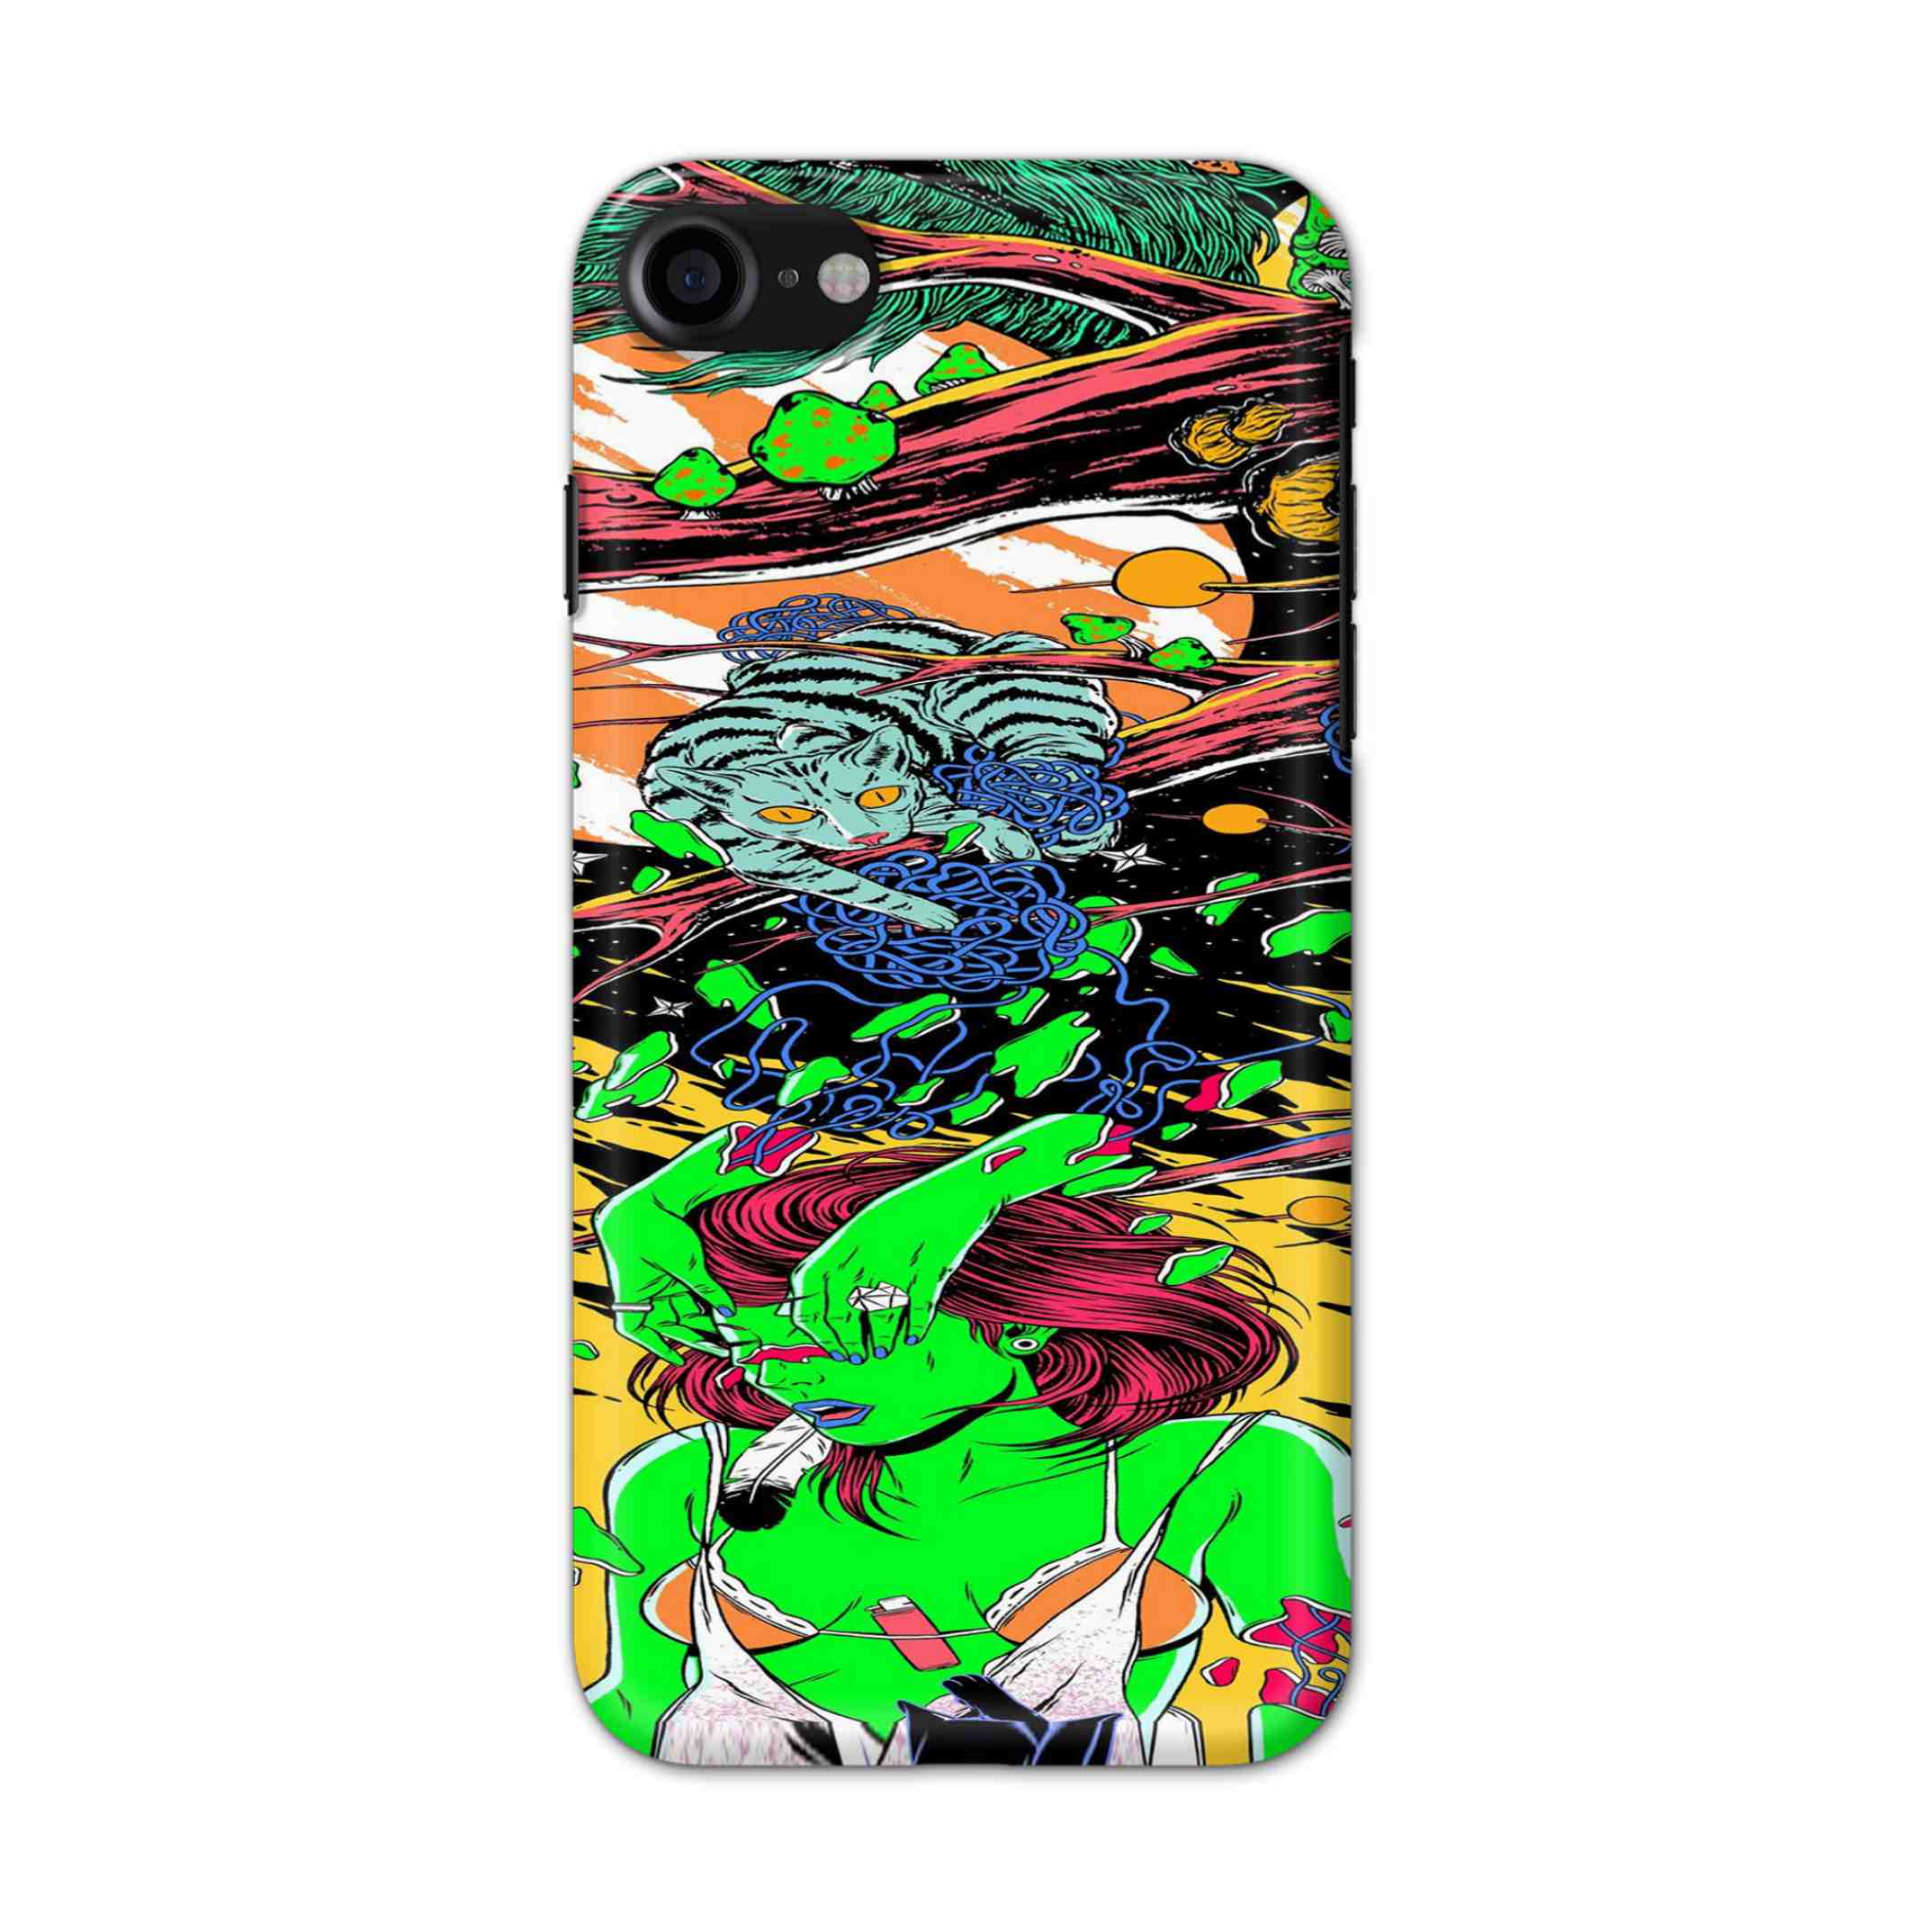 Buy Green Girl Art Hard Back Mobile Phone Case/Cover For iPhone 7 / 8 Online